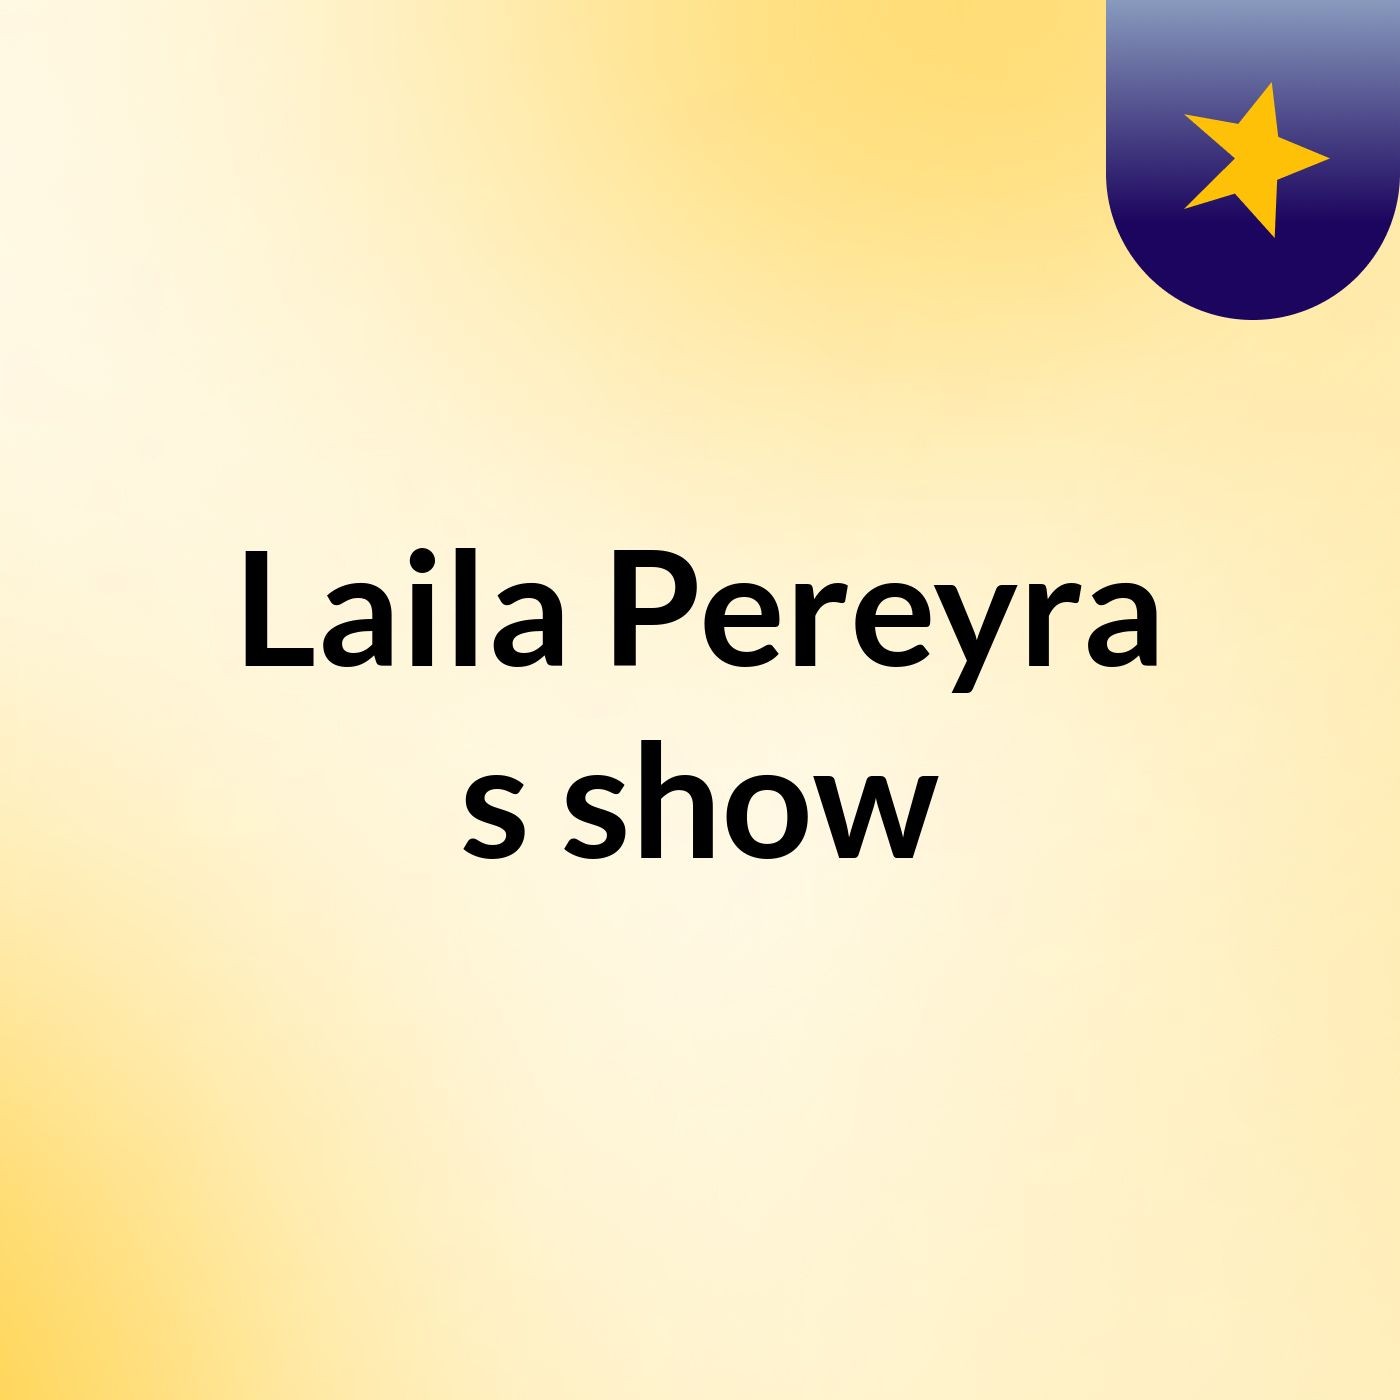 Laila Pereyra's show